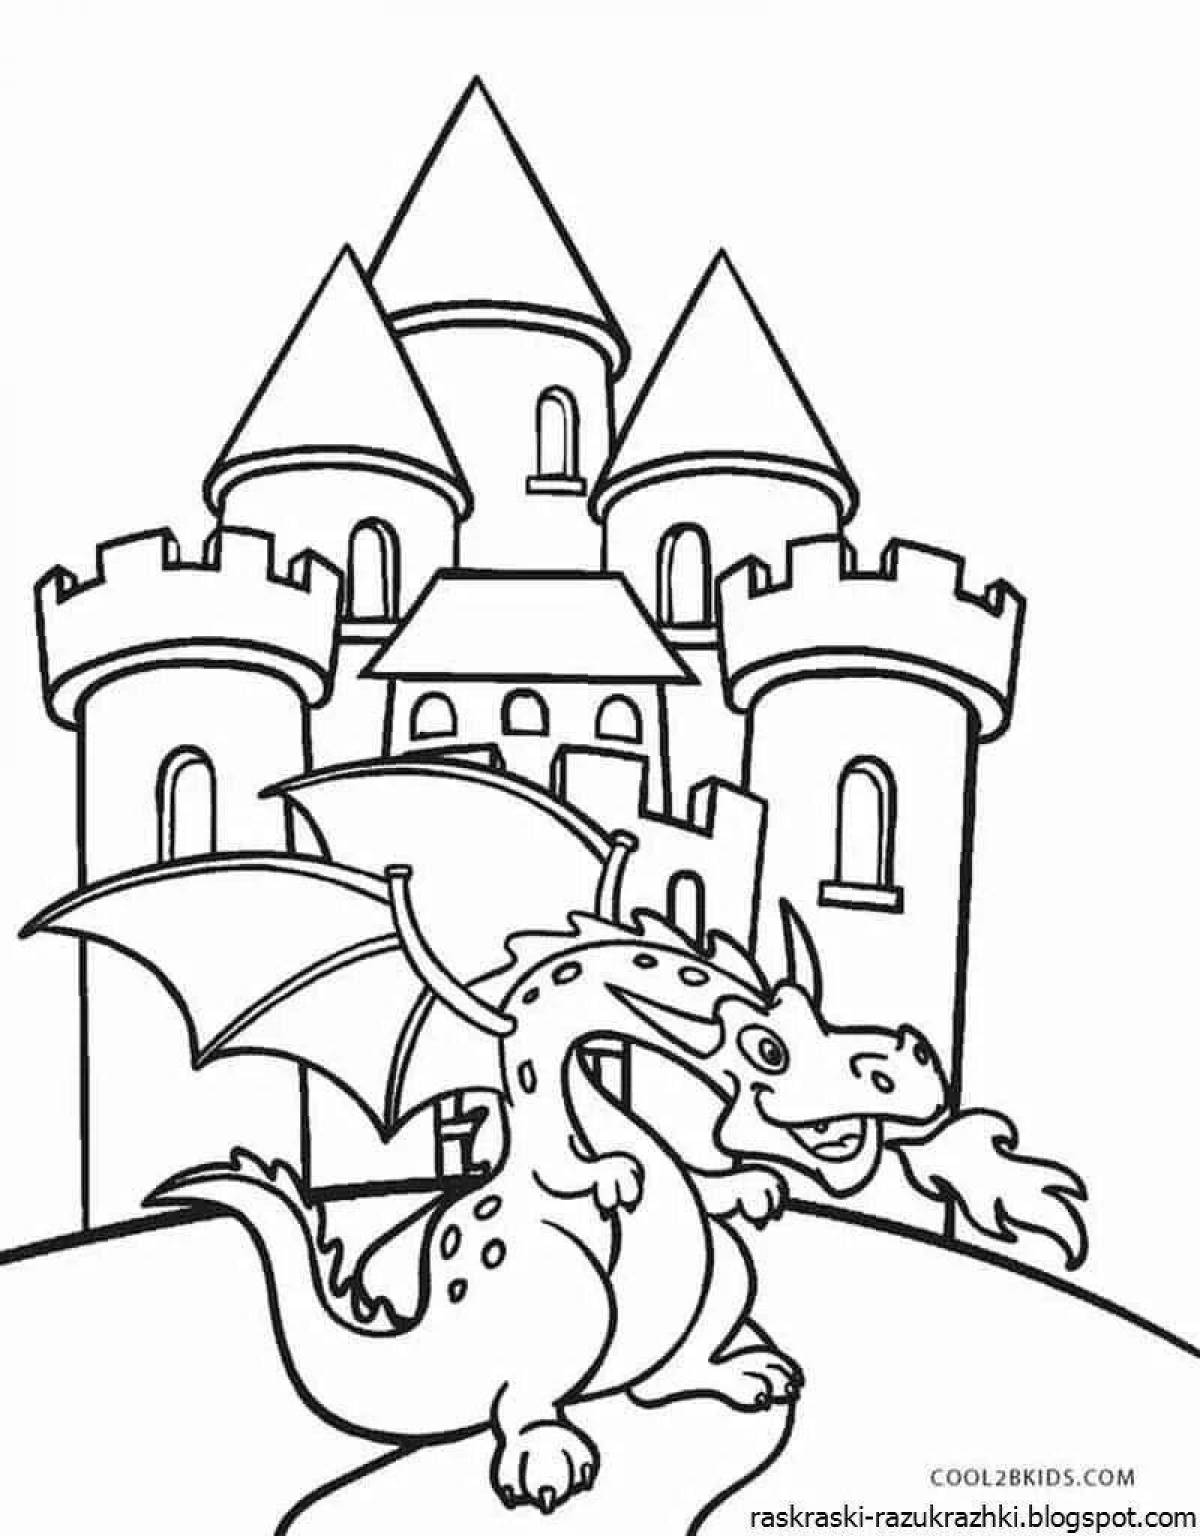 Colorful fairytale castle coloring page